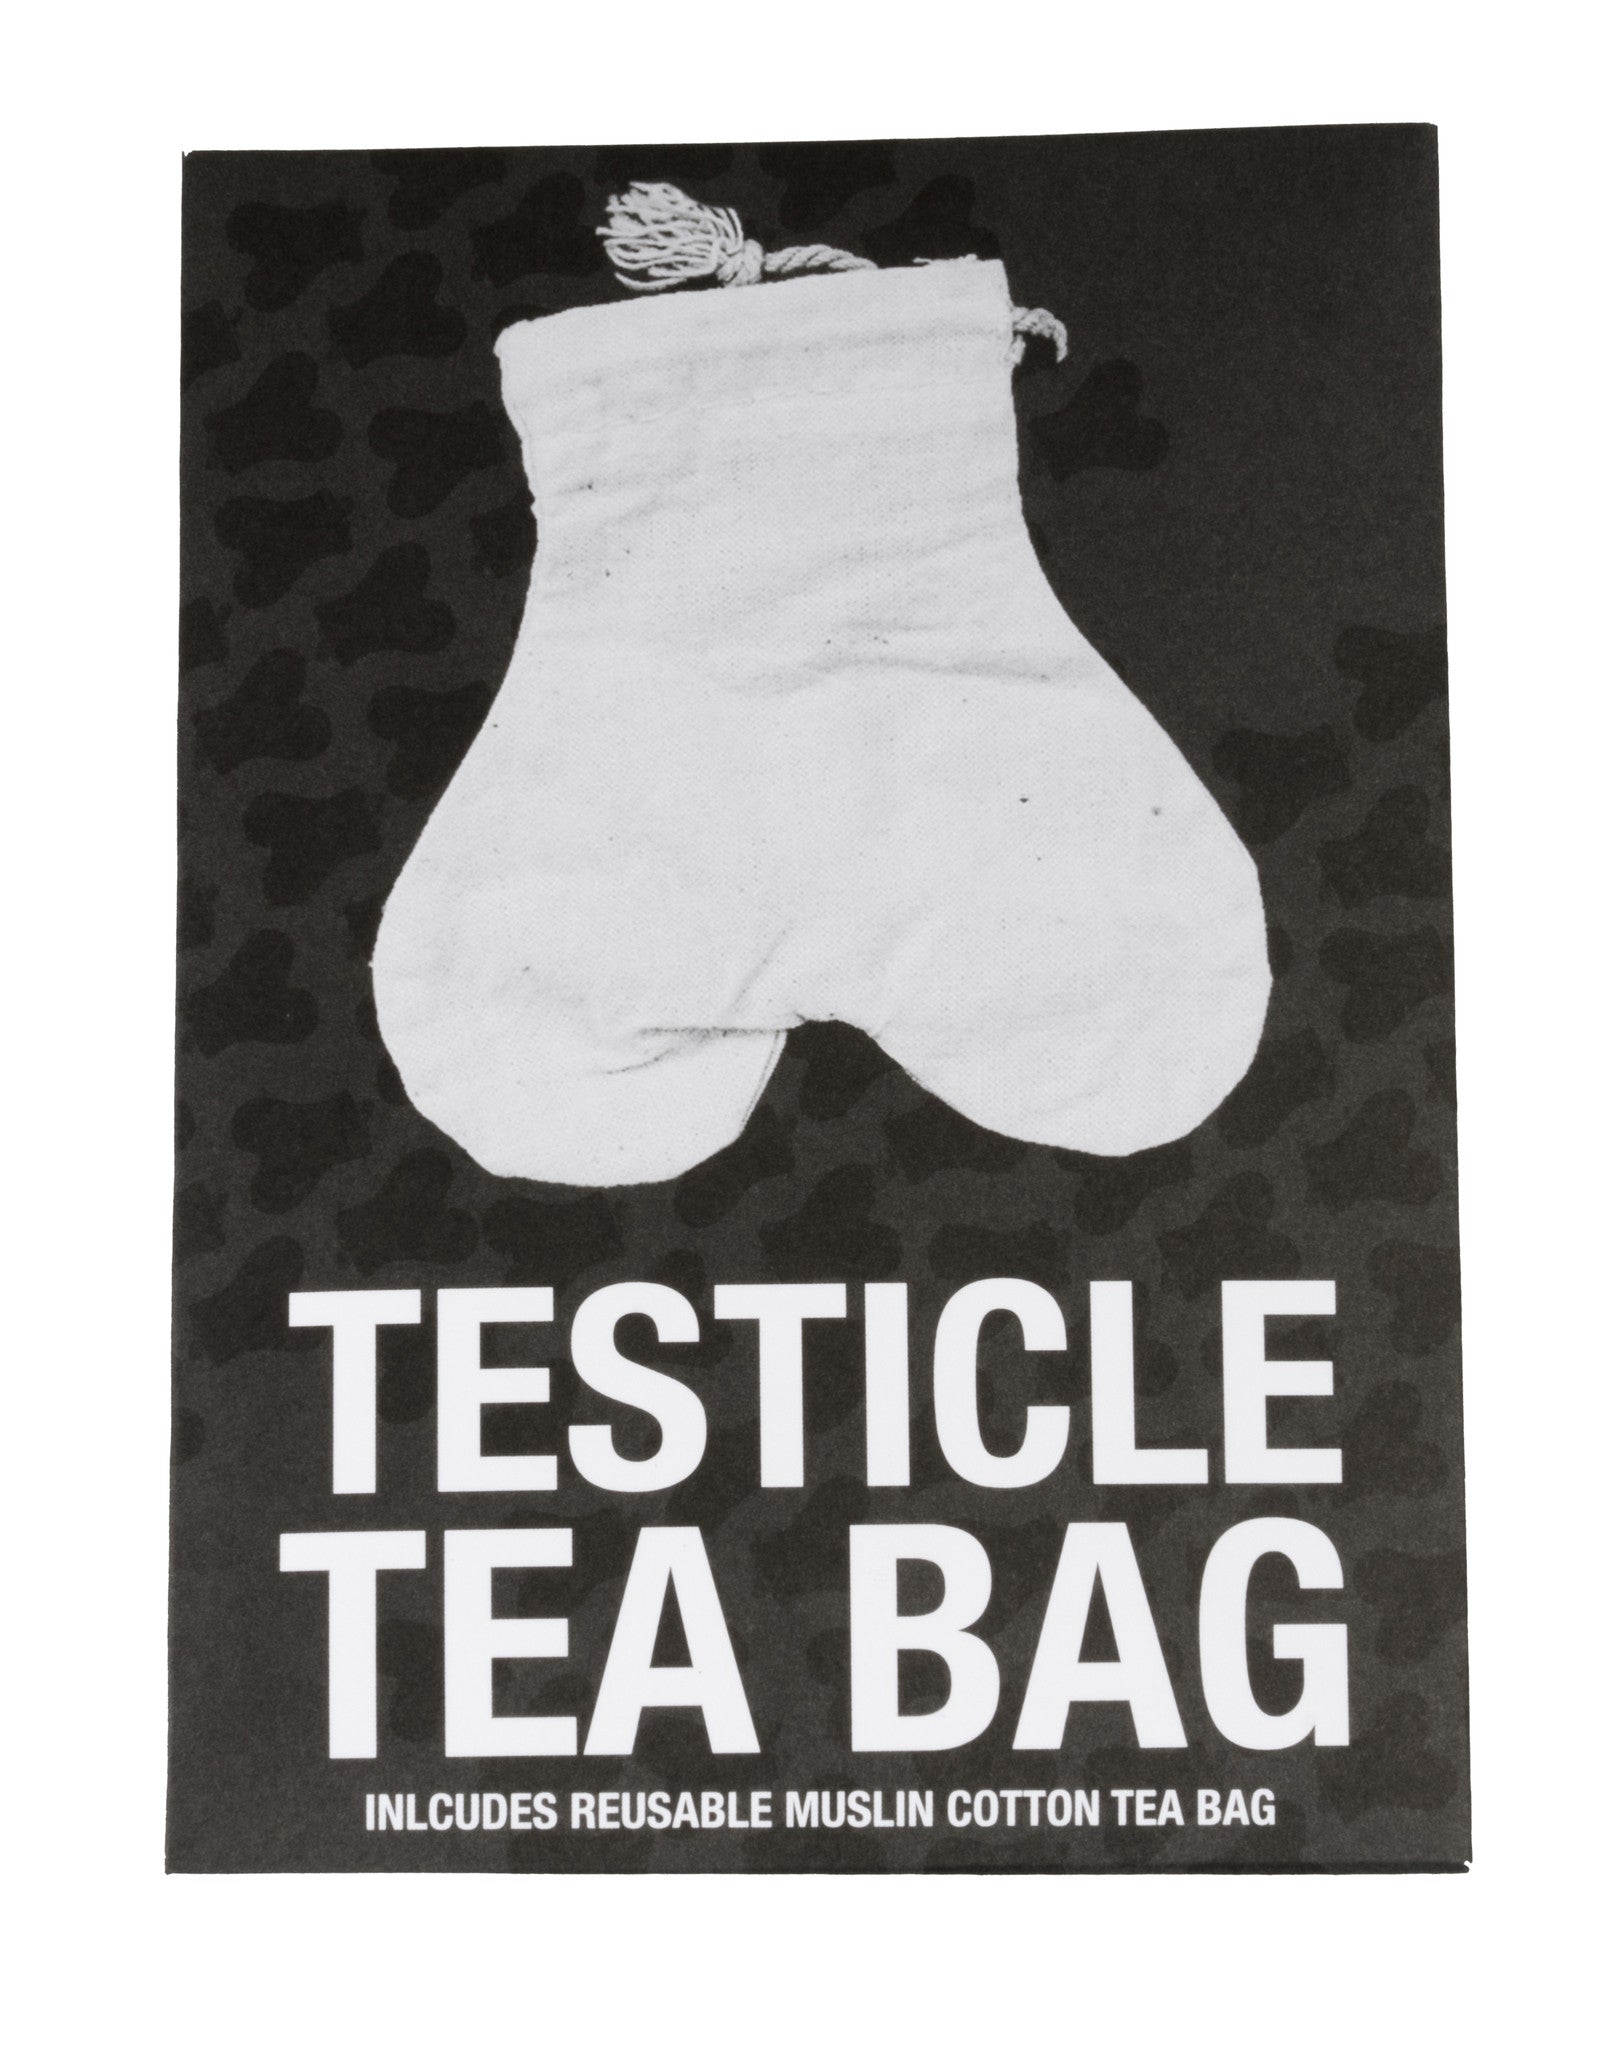 Teabag by Mail - The Reusable Testicle Tea Bag